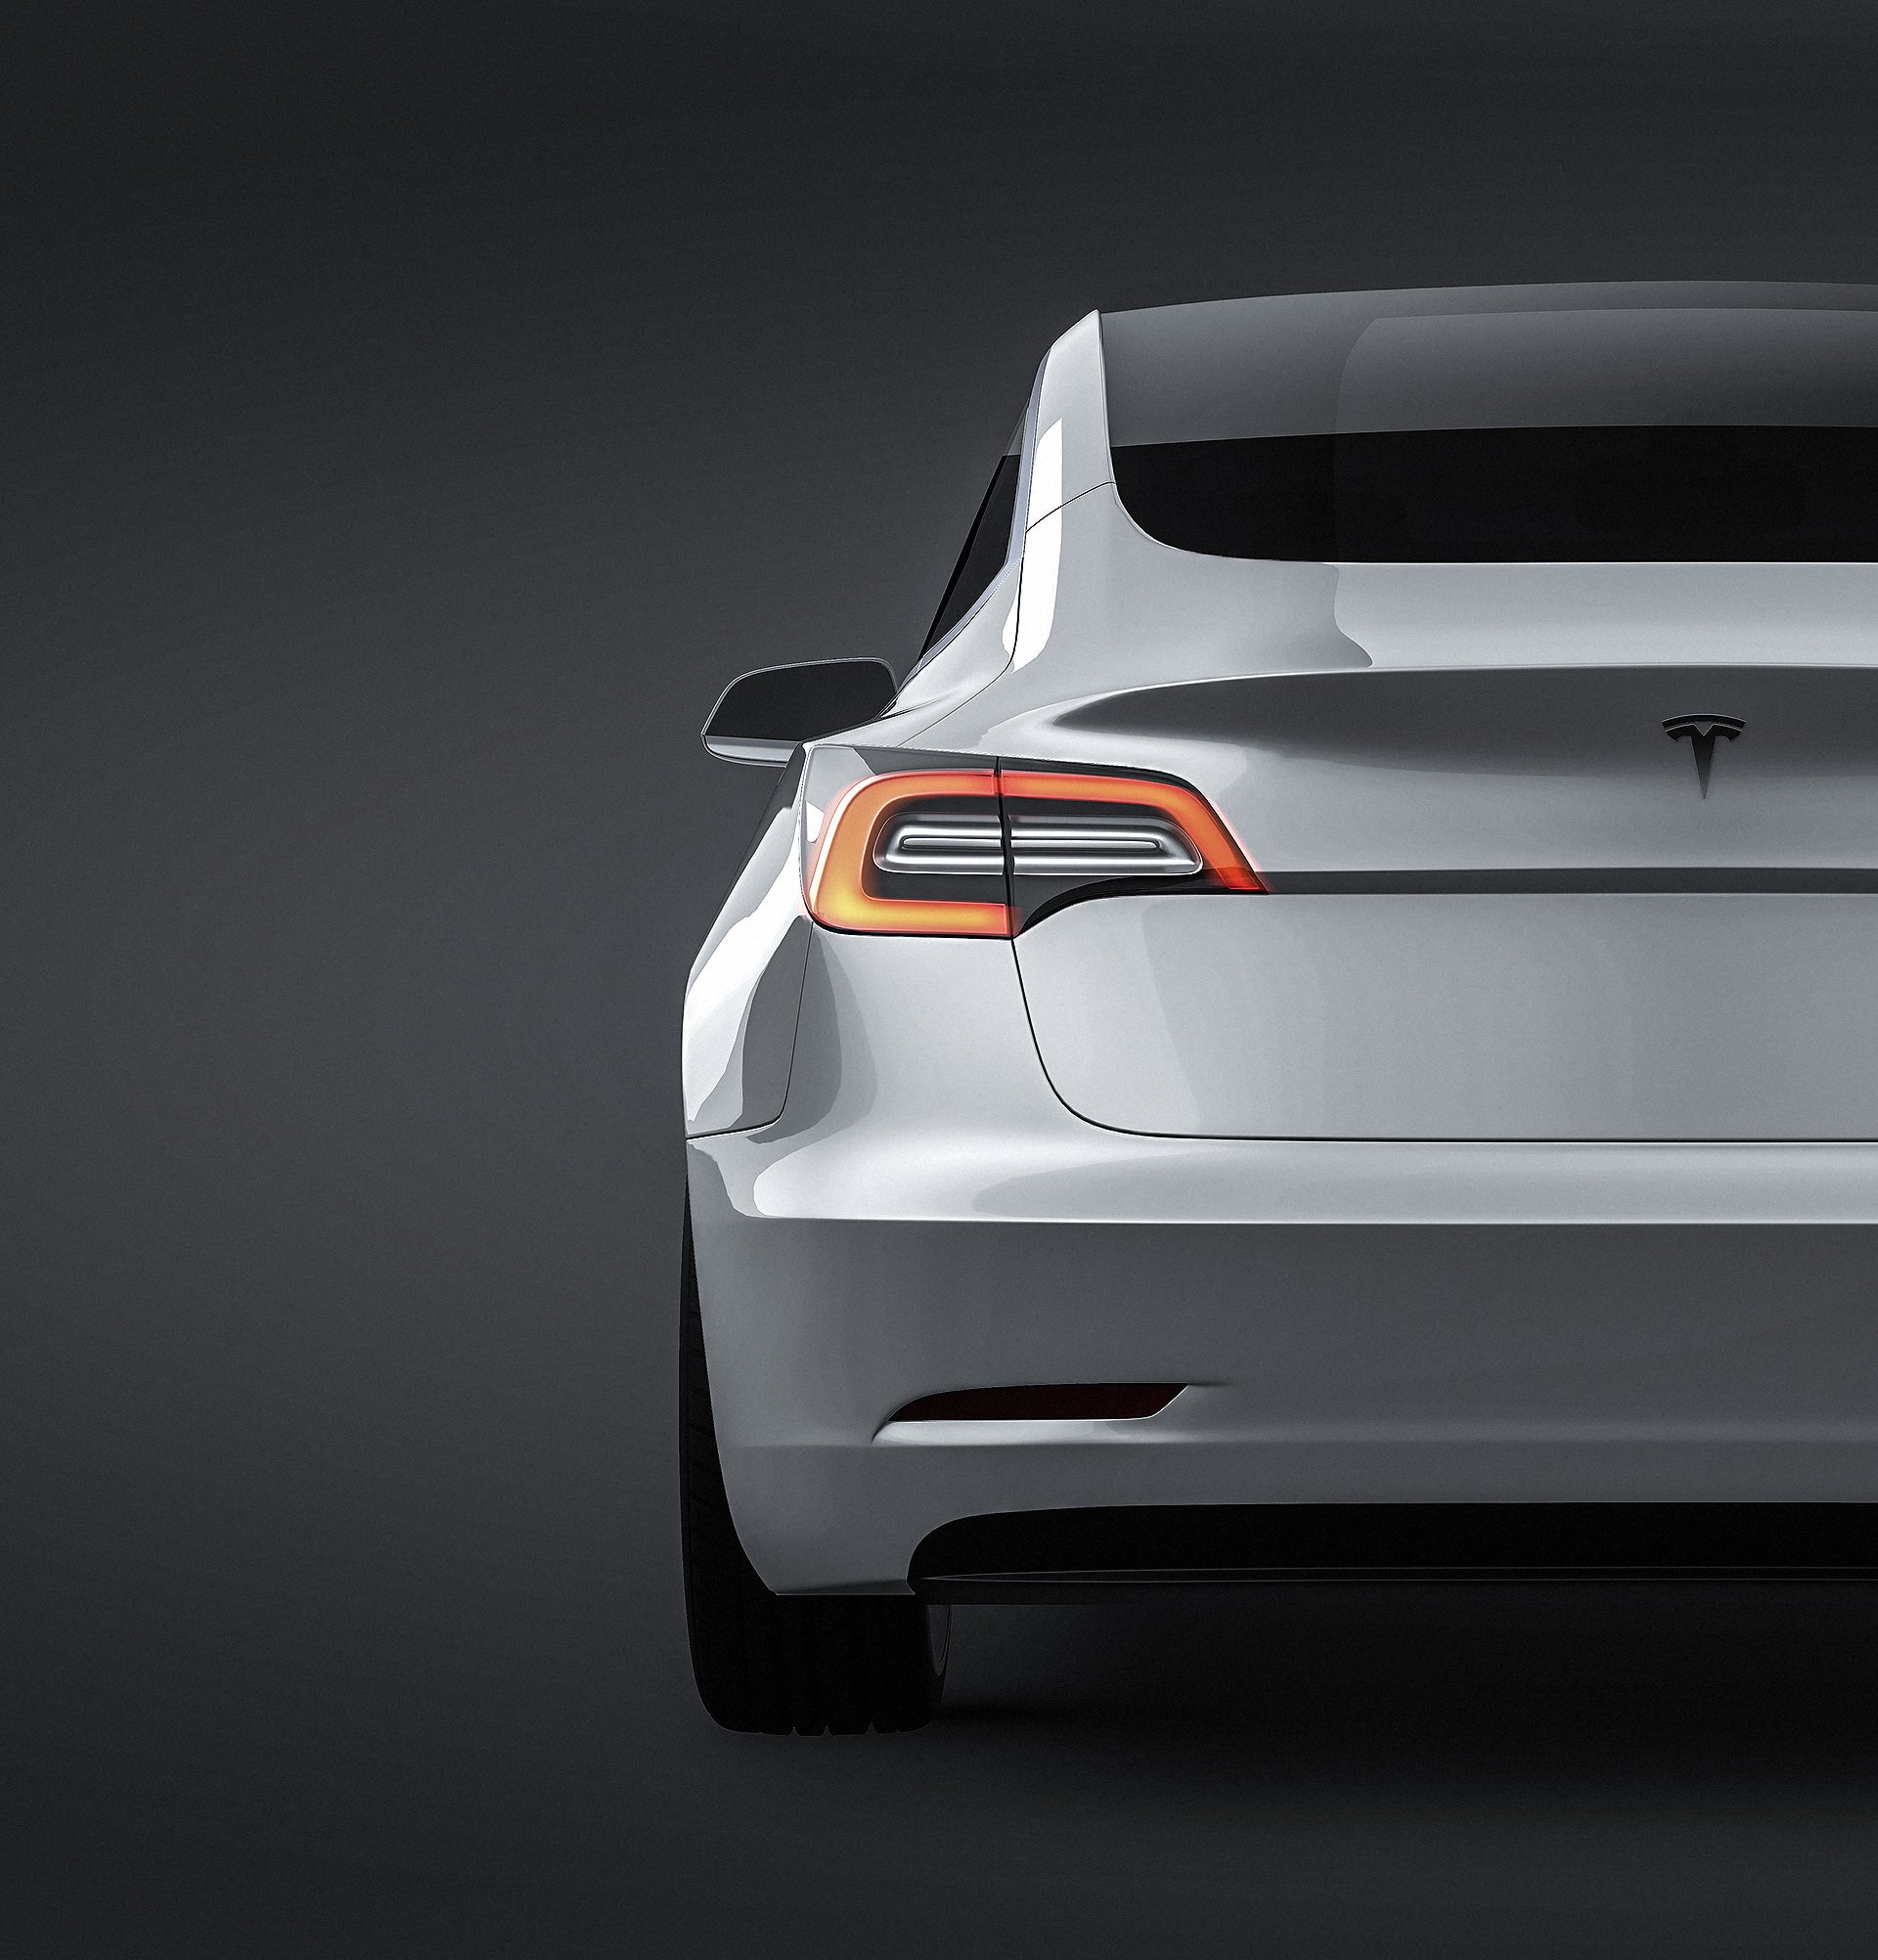 Tesla Model 3 2018 glossy finish - all sides Car Mockup Template.psd